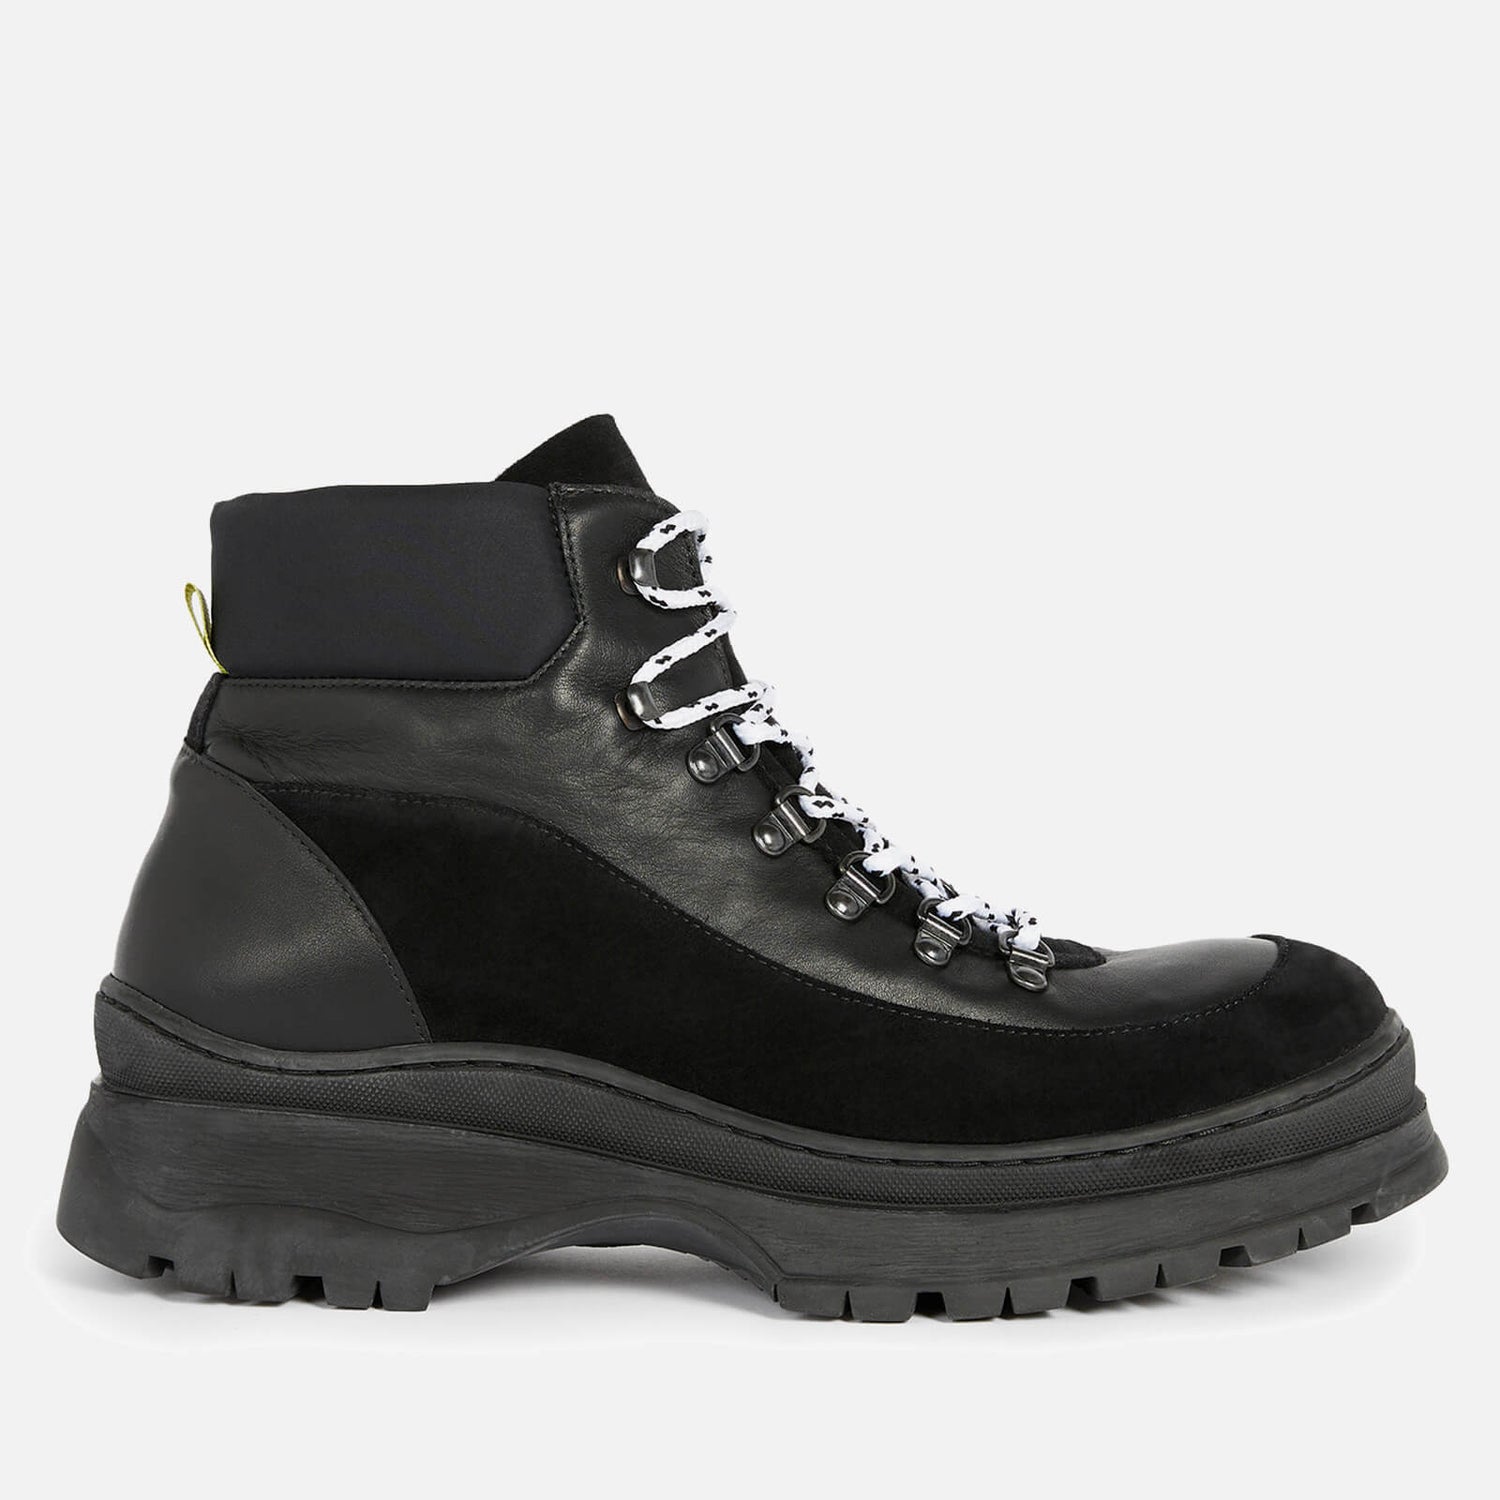 Ted Baker Men's Westonn Hiking Style Boots - Black